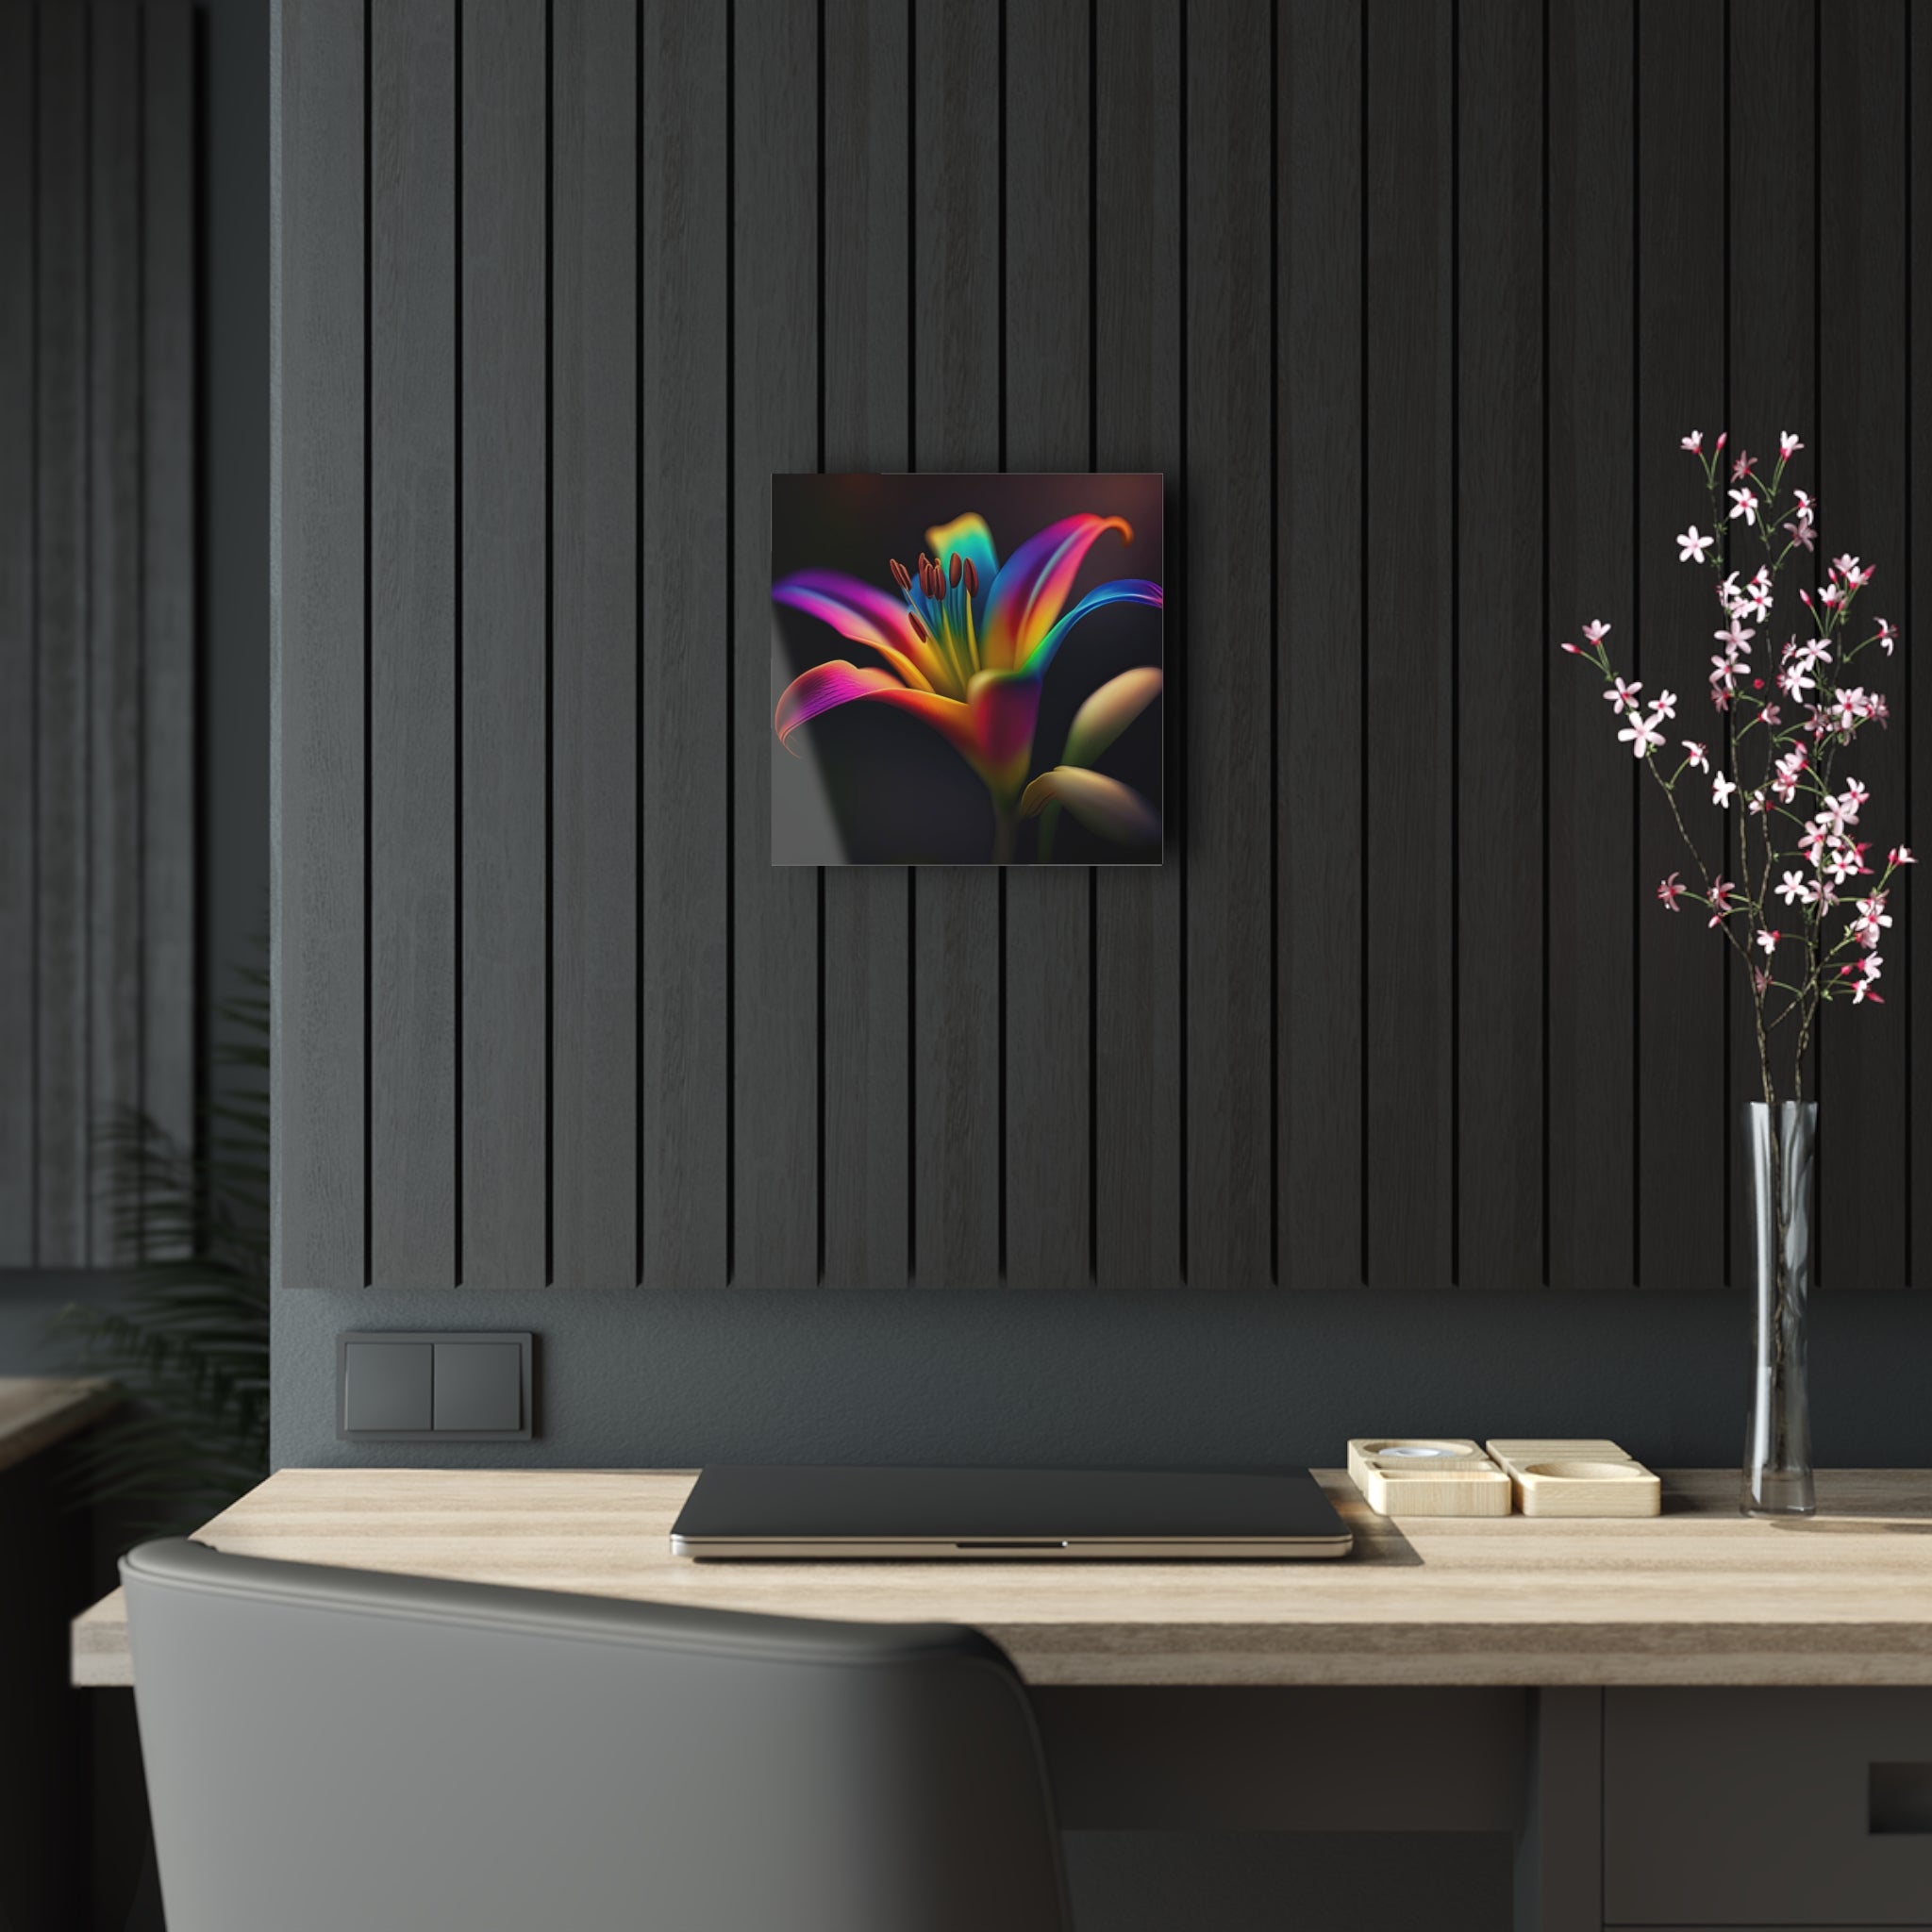 Rainbow Lily Delight Acrylic Print